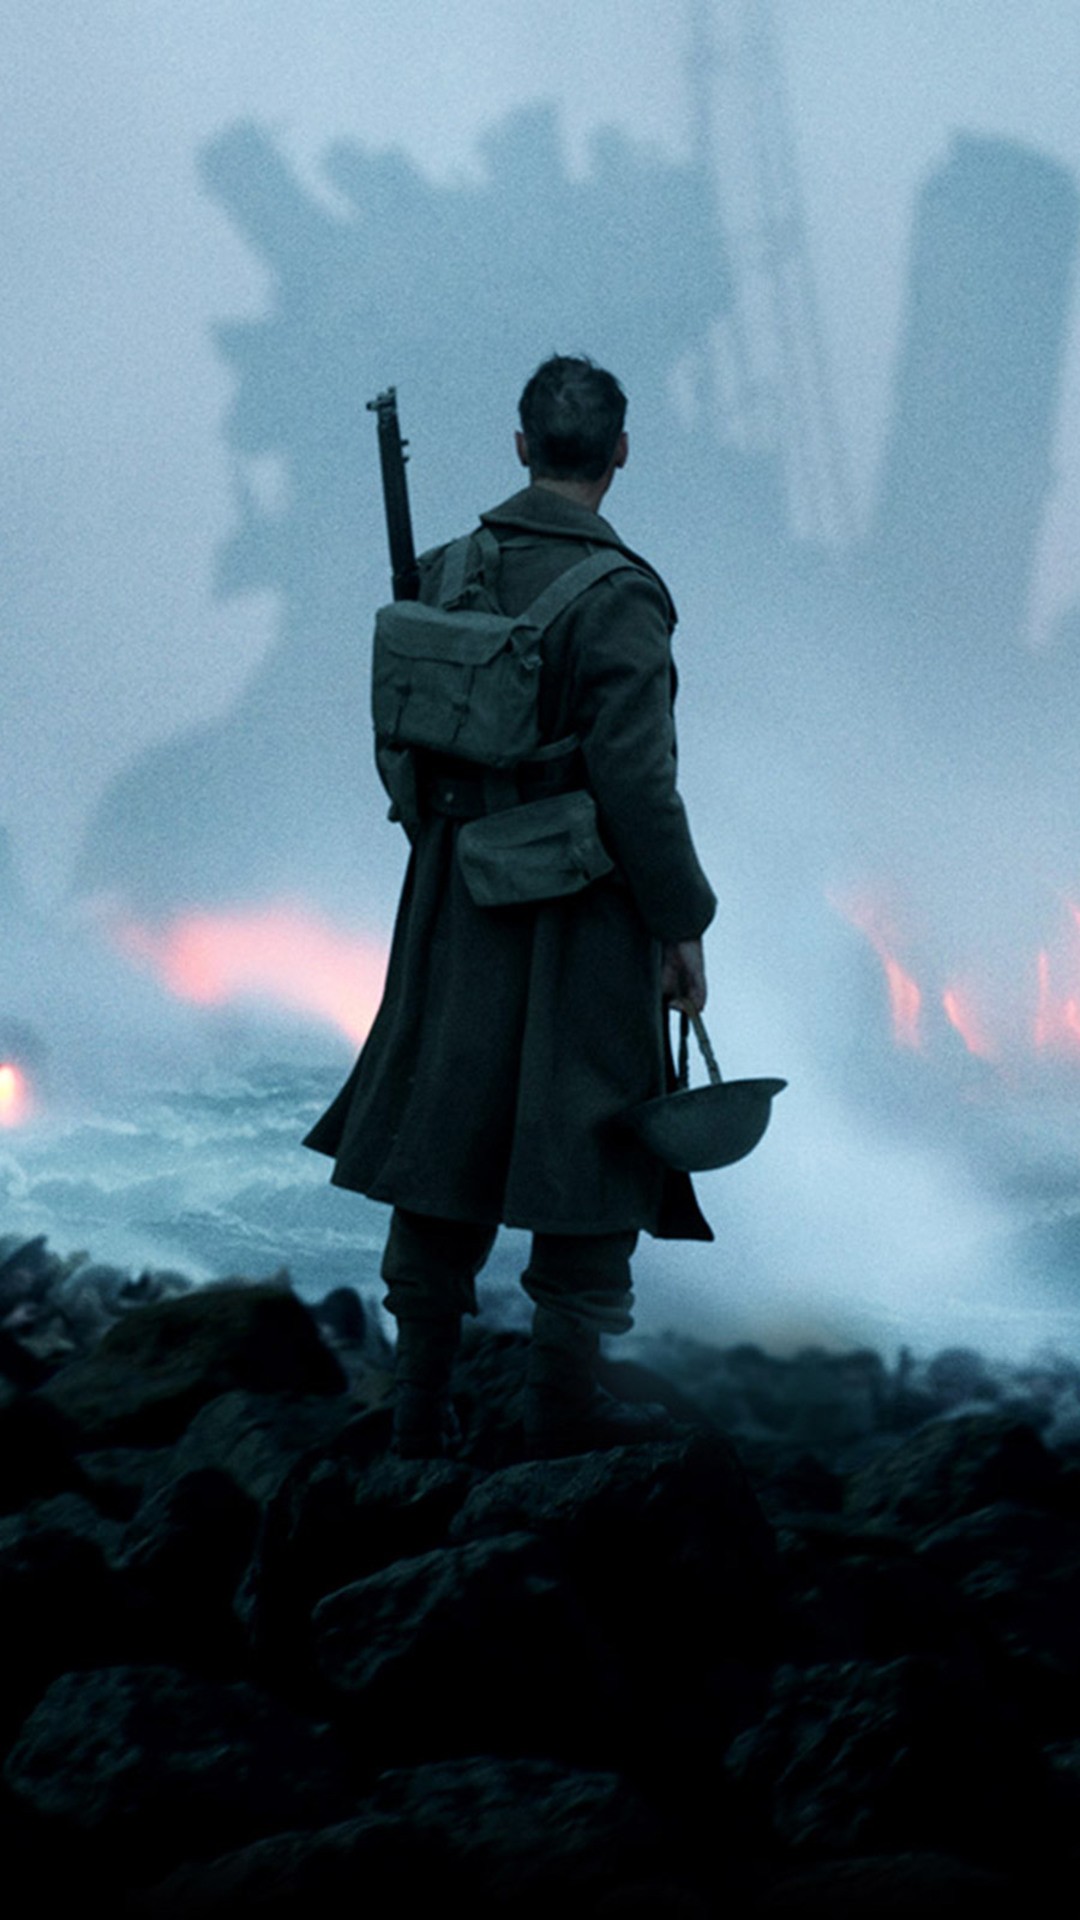 Dunkirk 2017 Movie Wallpaper 1080x1920 HD Wallpapers Download Free Map Images Wallpaper [wallpaper376.blogspot.com]